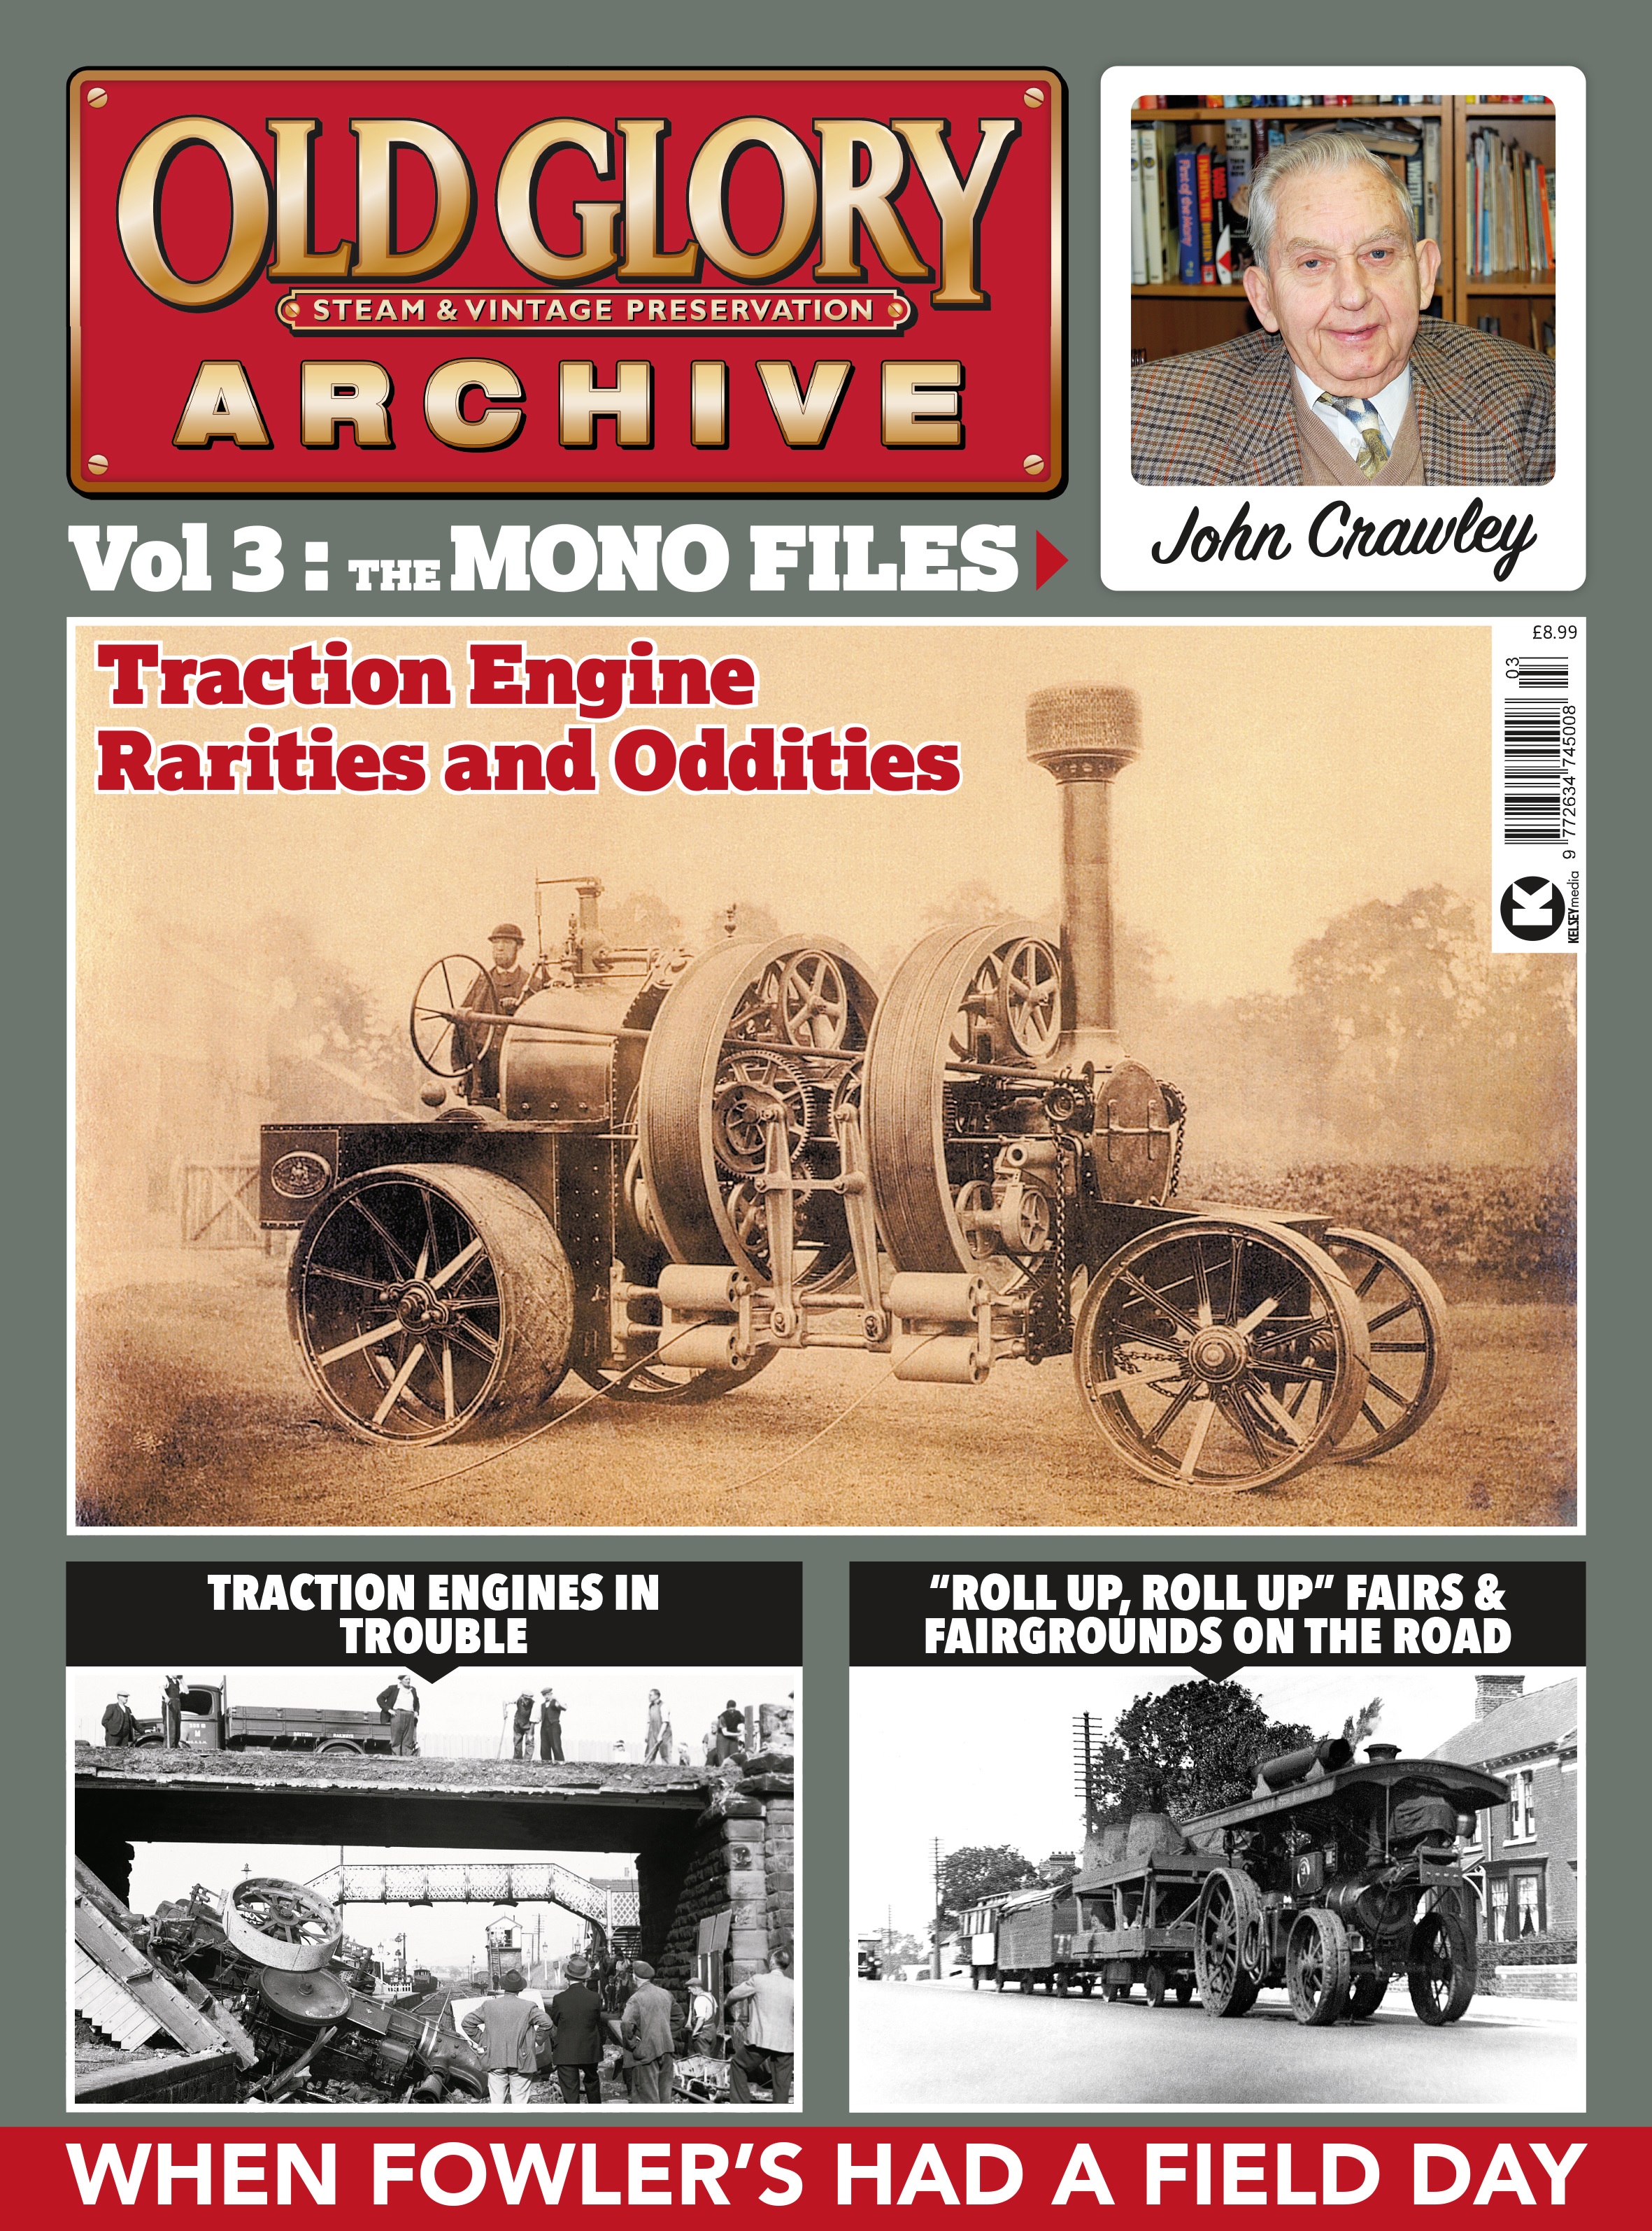 Old Glory Archive Volume 3 The Mono Files - John Crawley